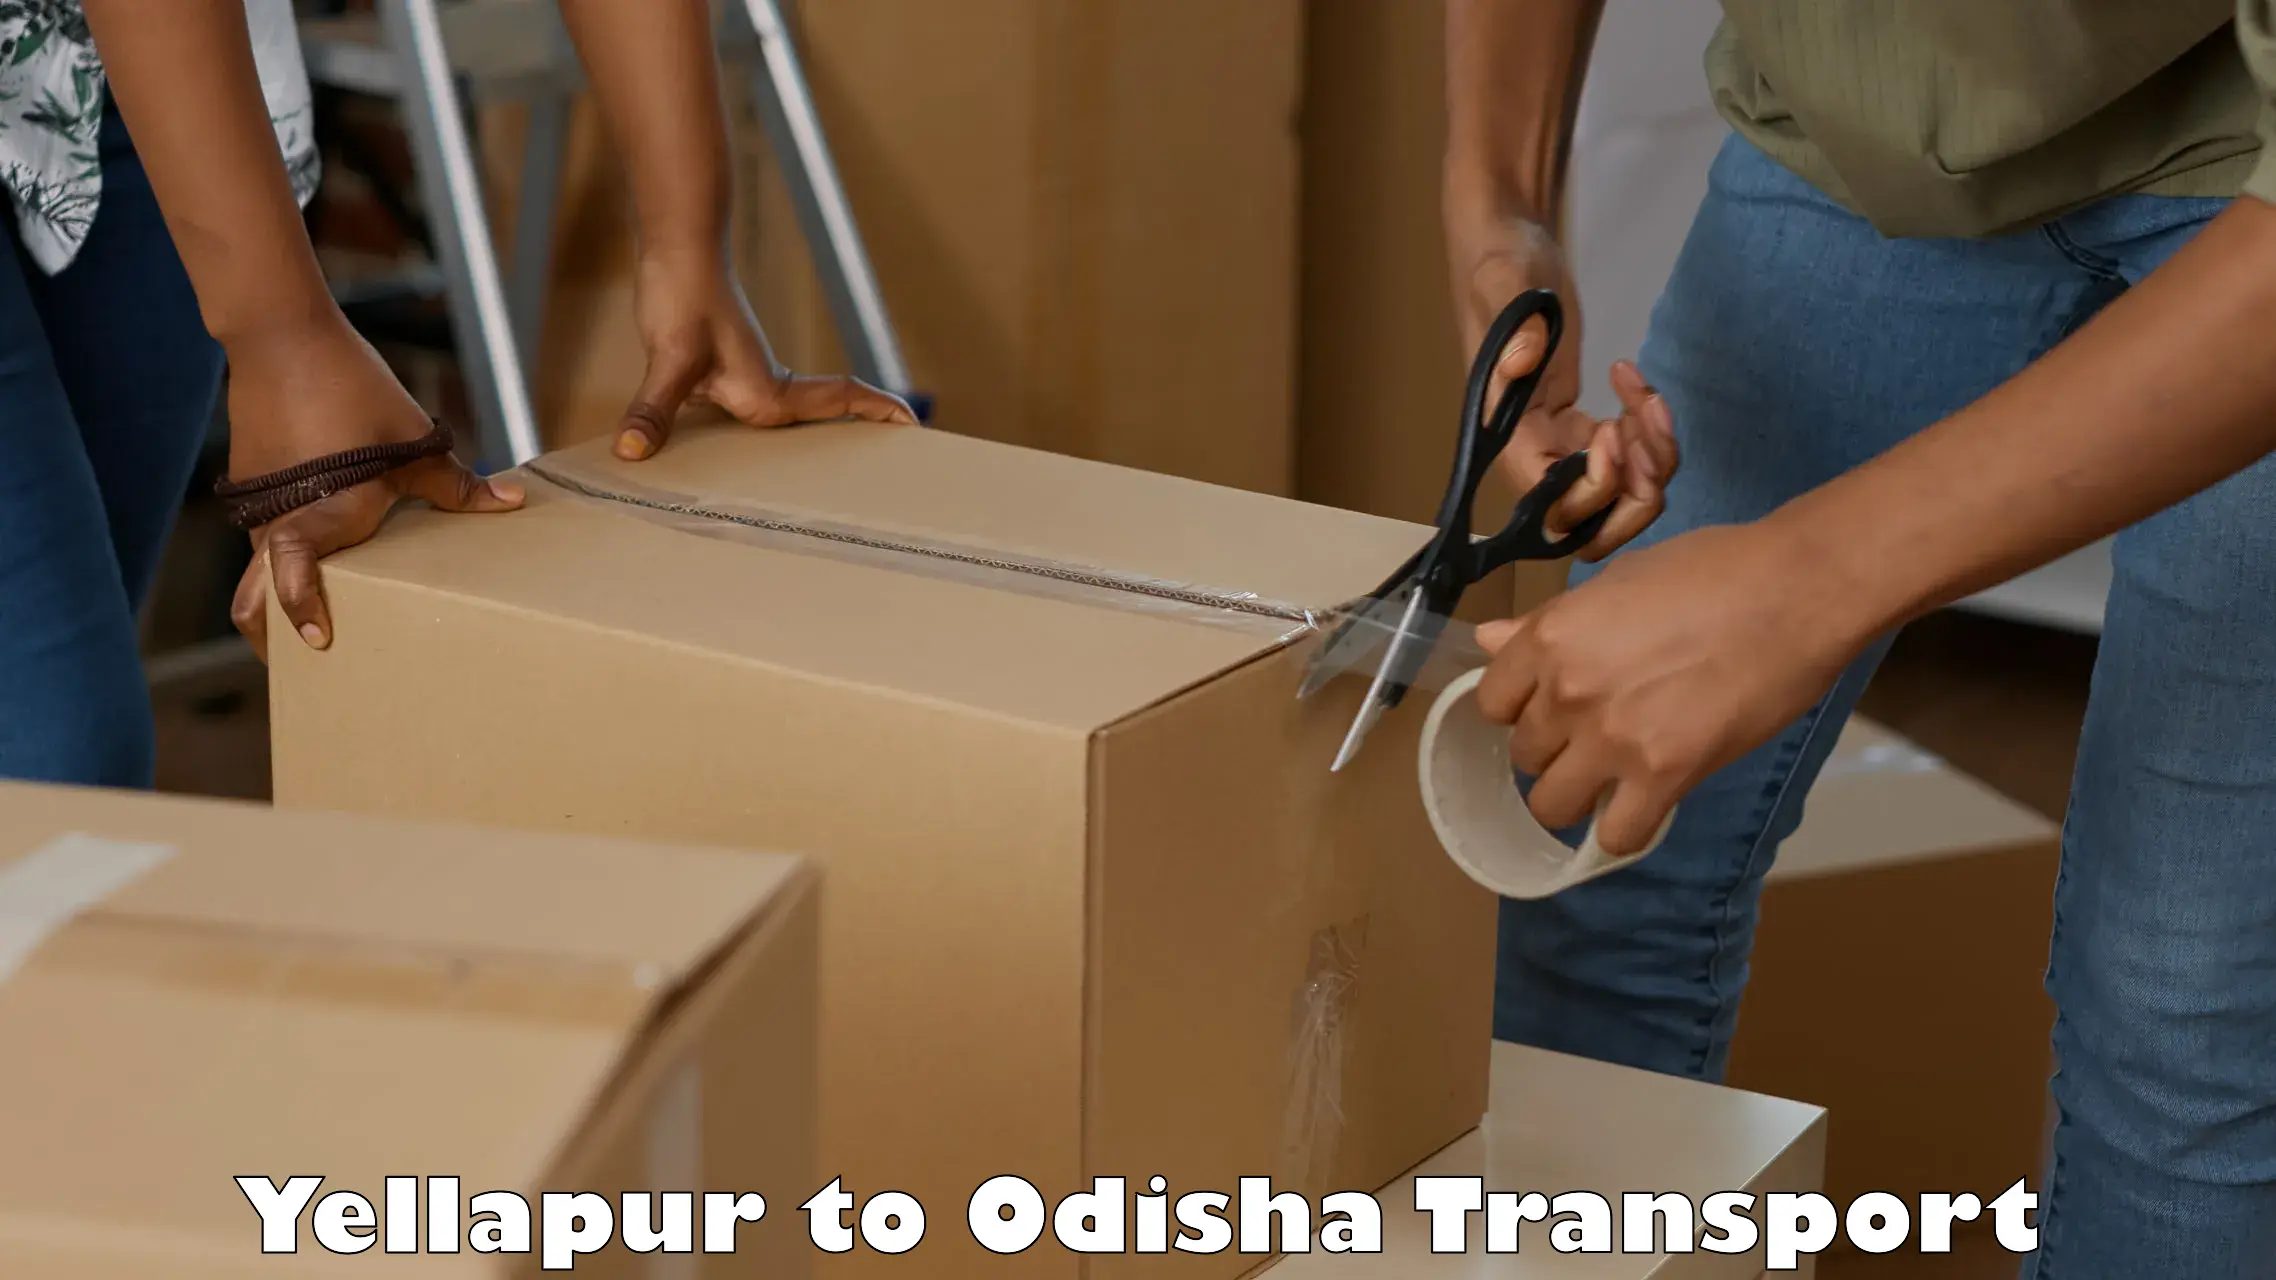 Truck transport companies in India Yellapur to Chandinchowk